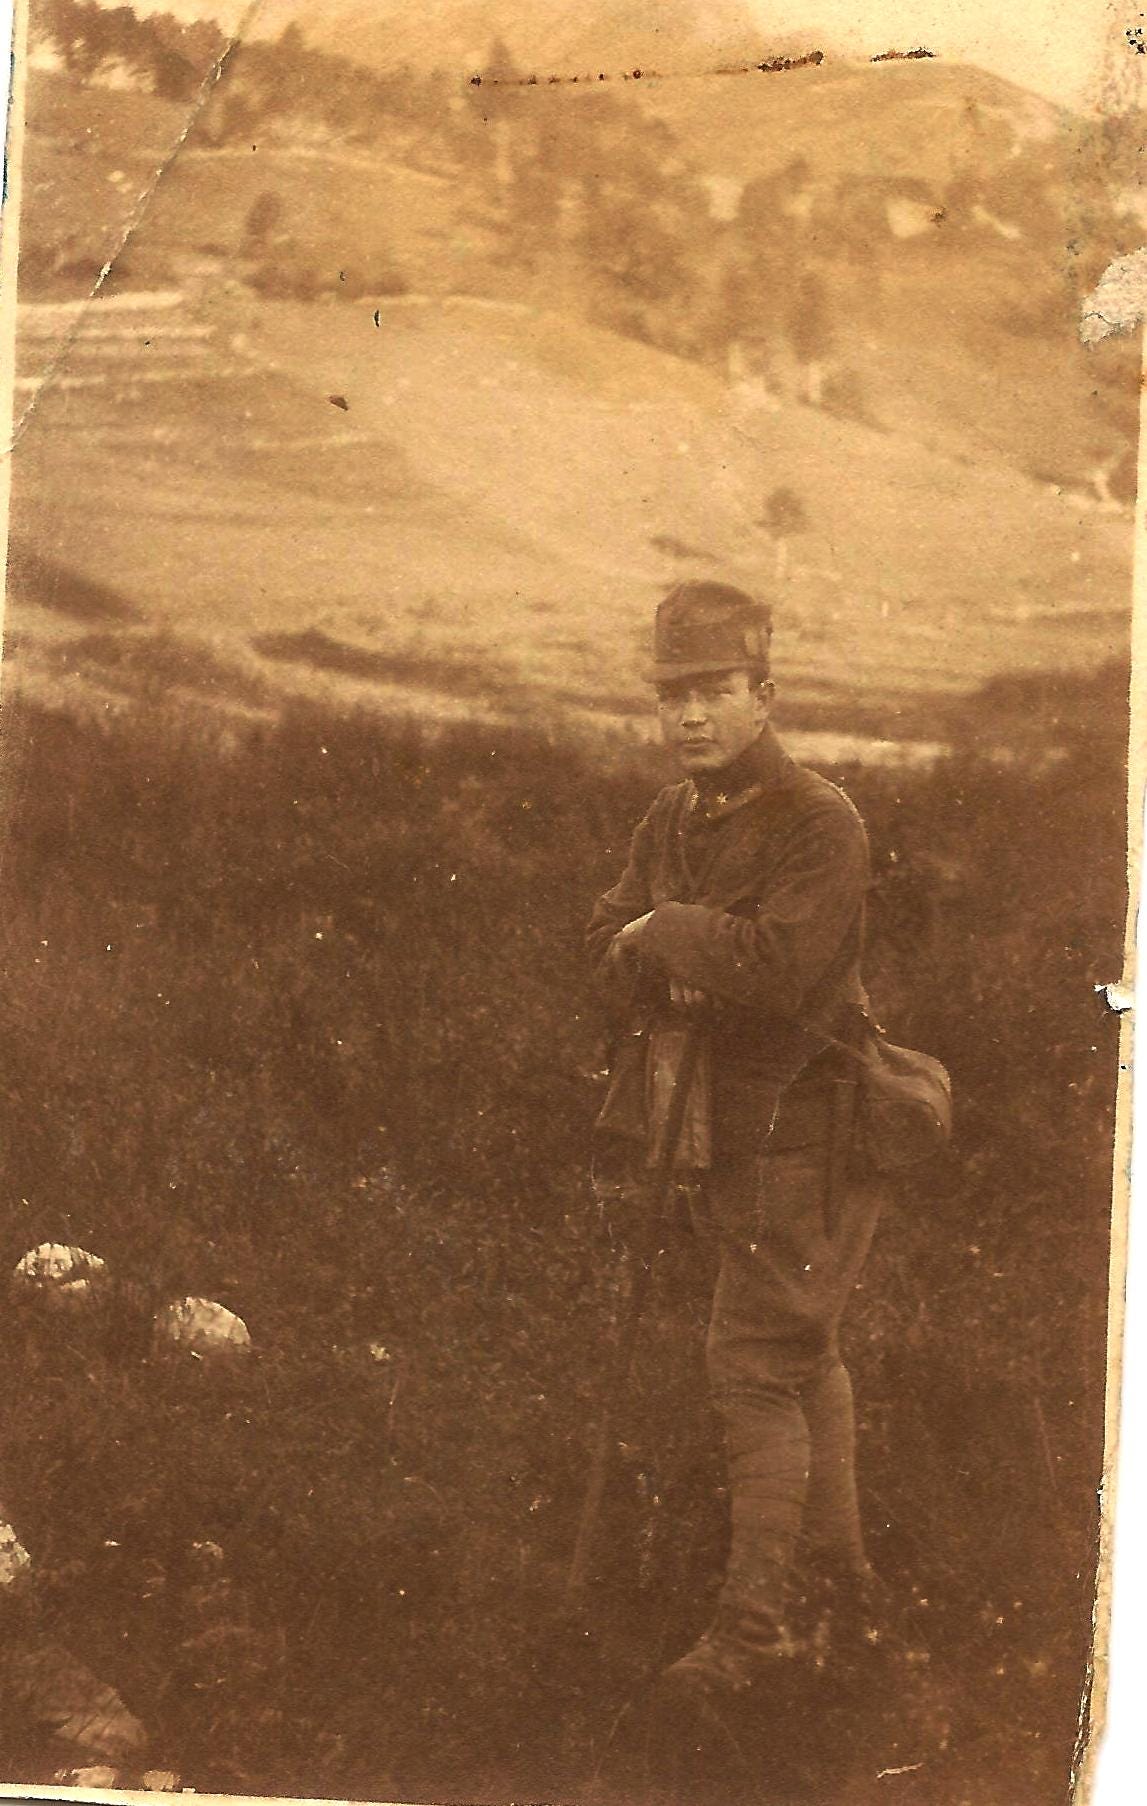 Portrait of Eugene Lorinczi as an Austro-Hungarian soldier, 1915/16.